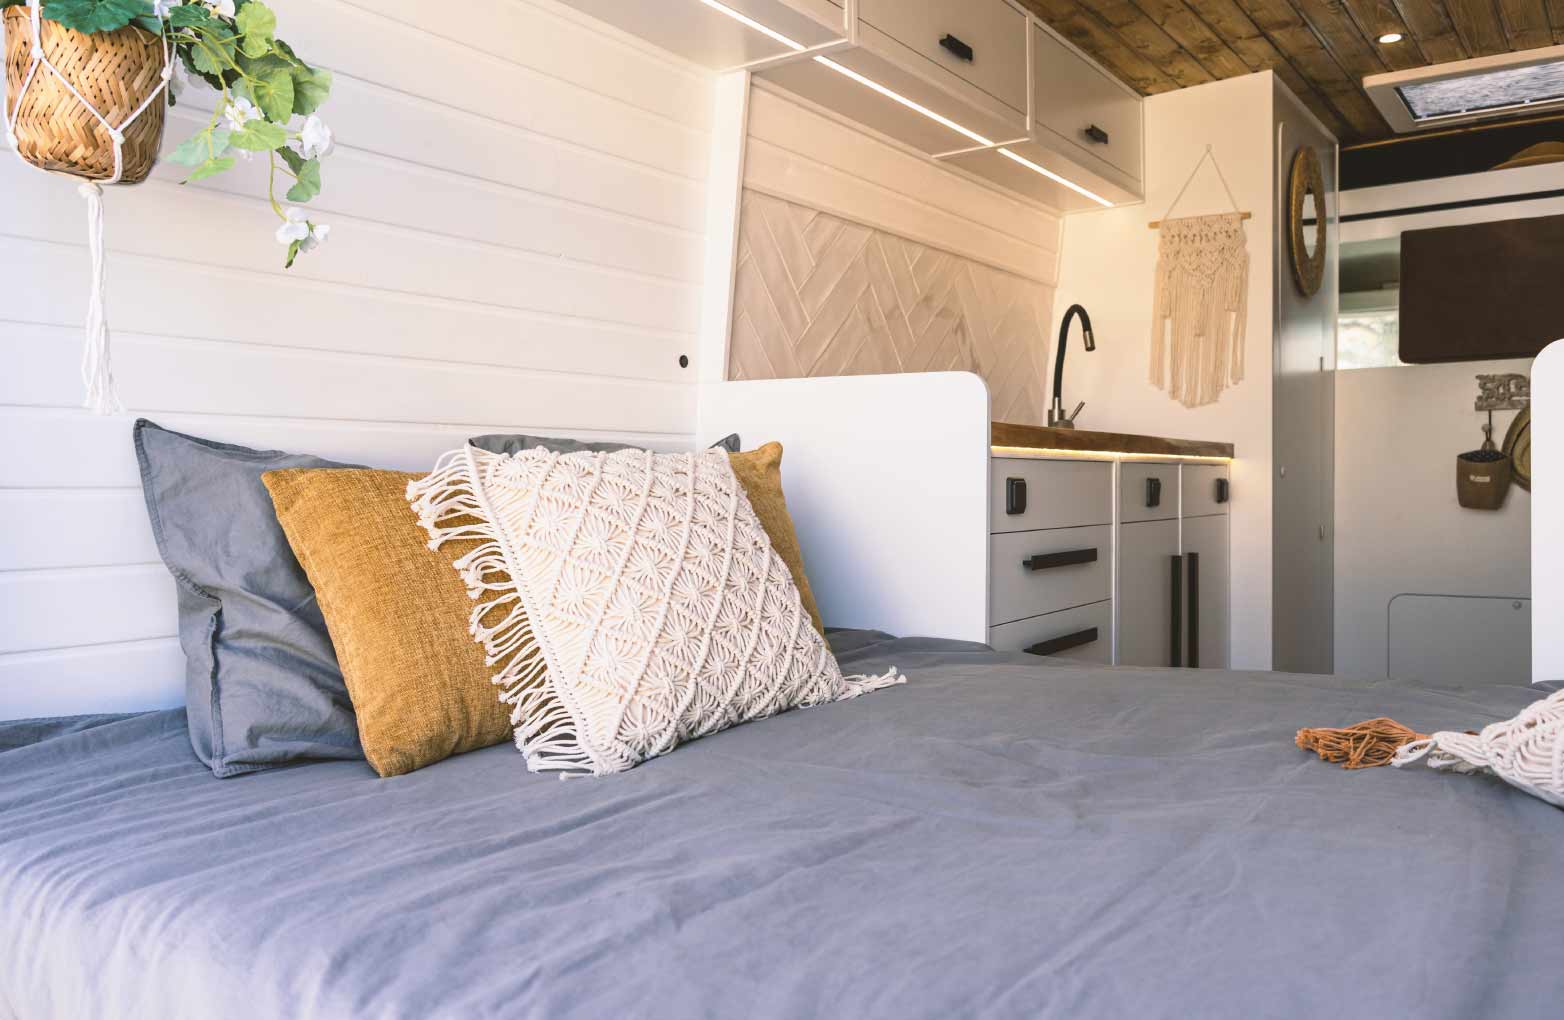 A short queen mattress in a cozy RV bedroom.